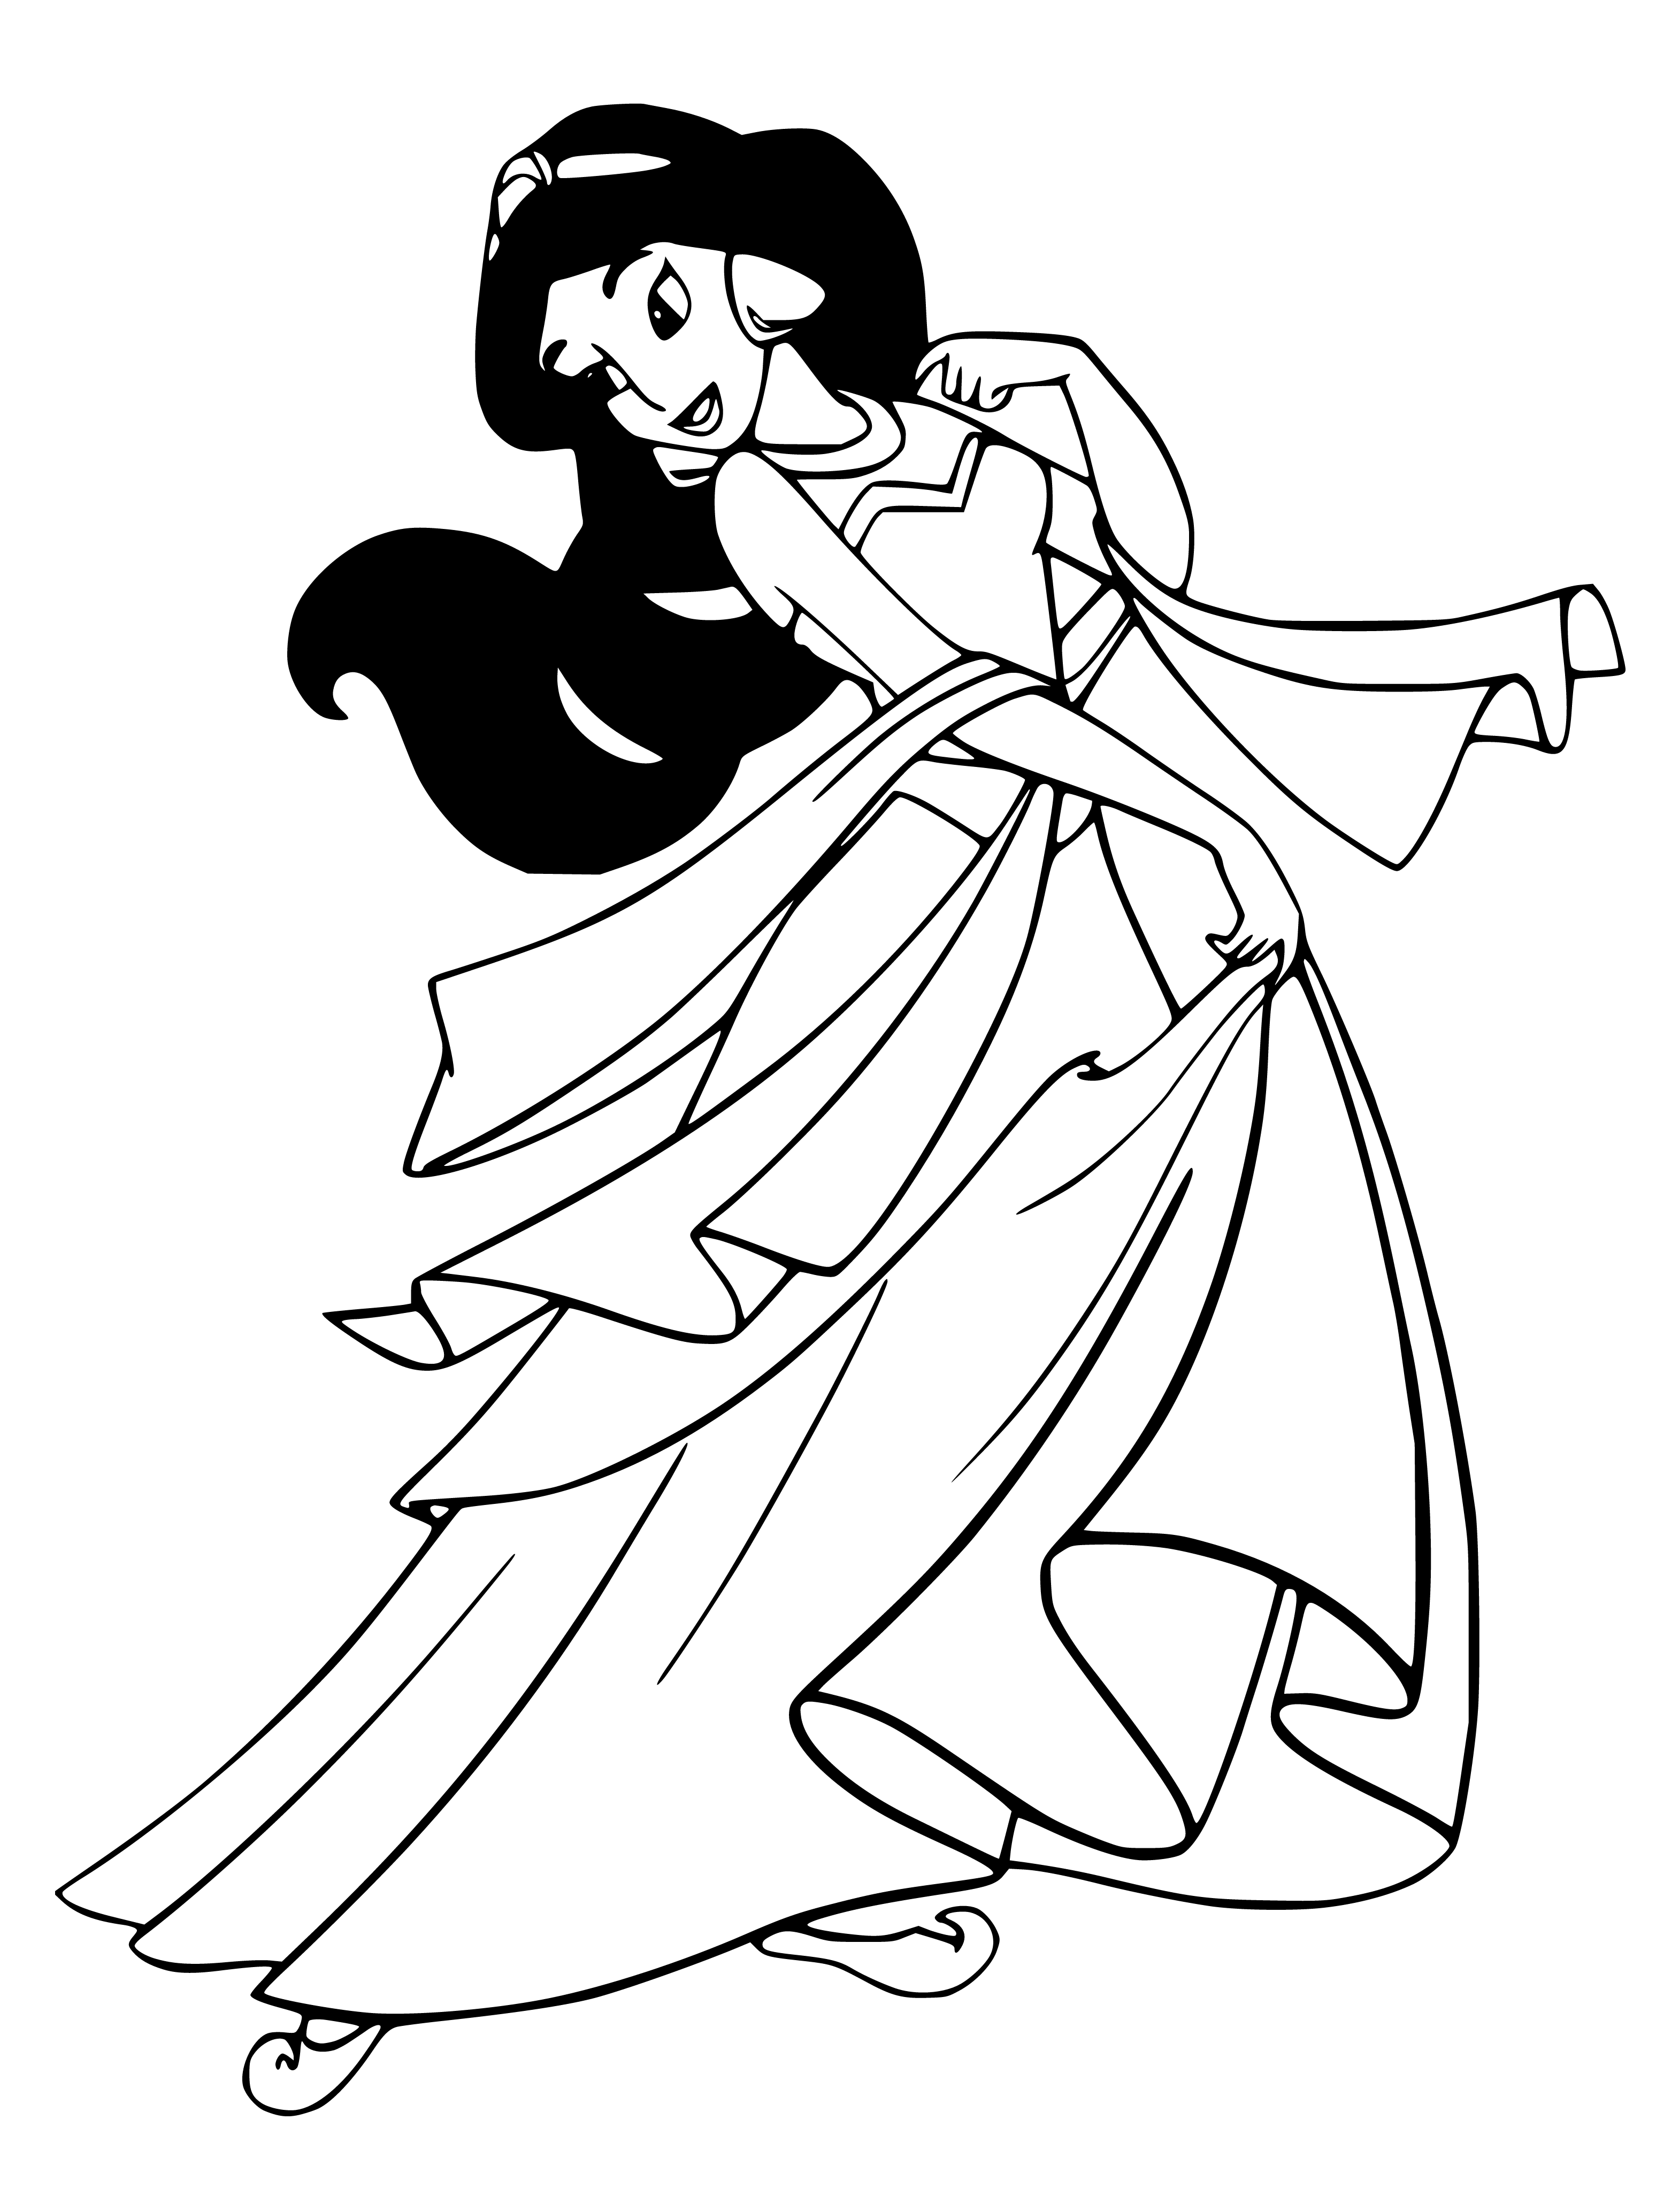 Princess Jasmine Coloring Page for kids to print - SheetalColor.com